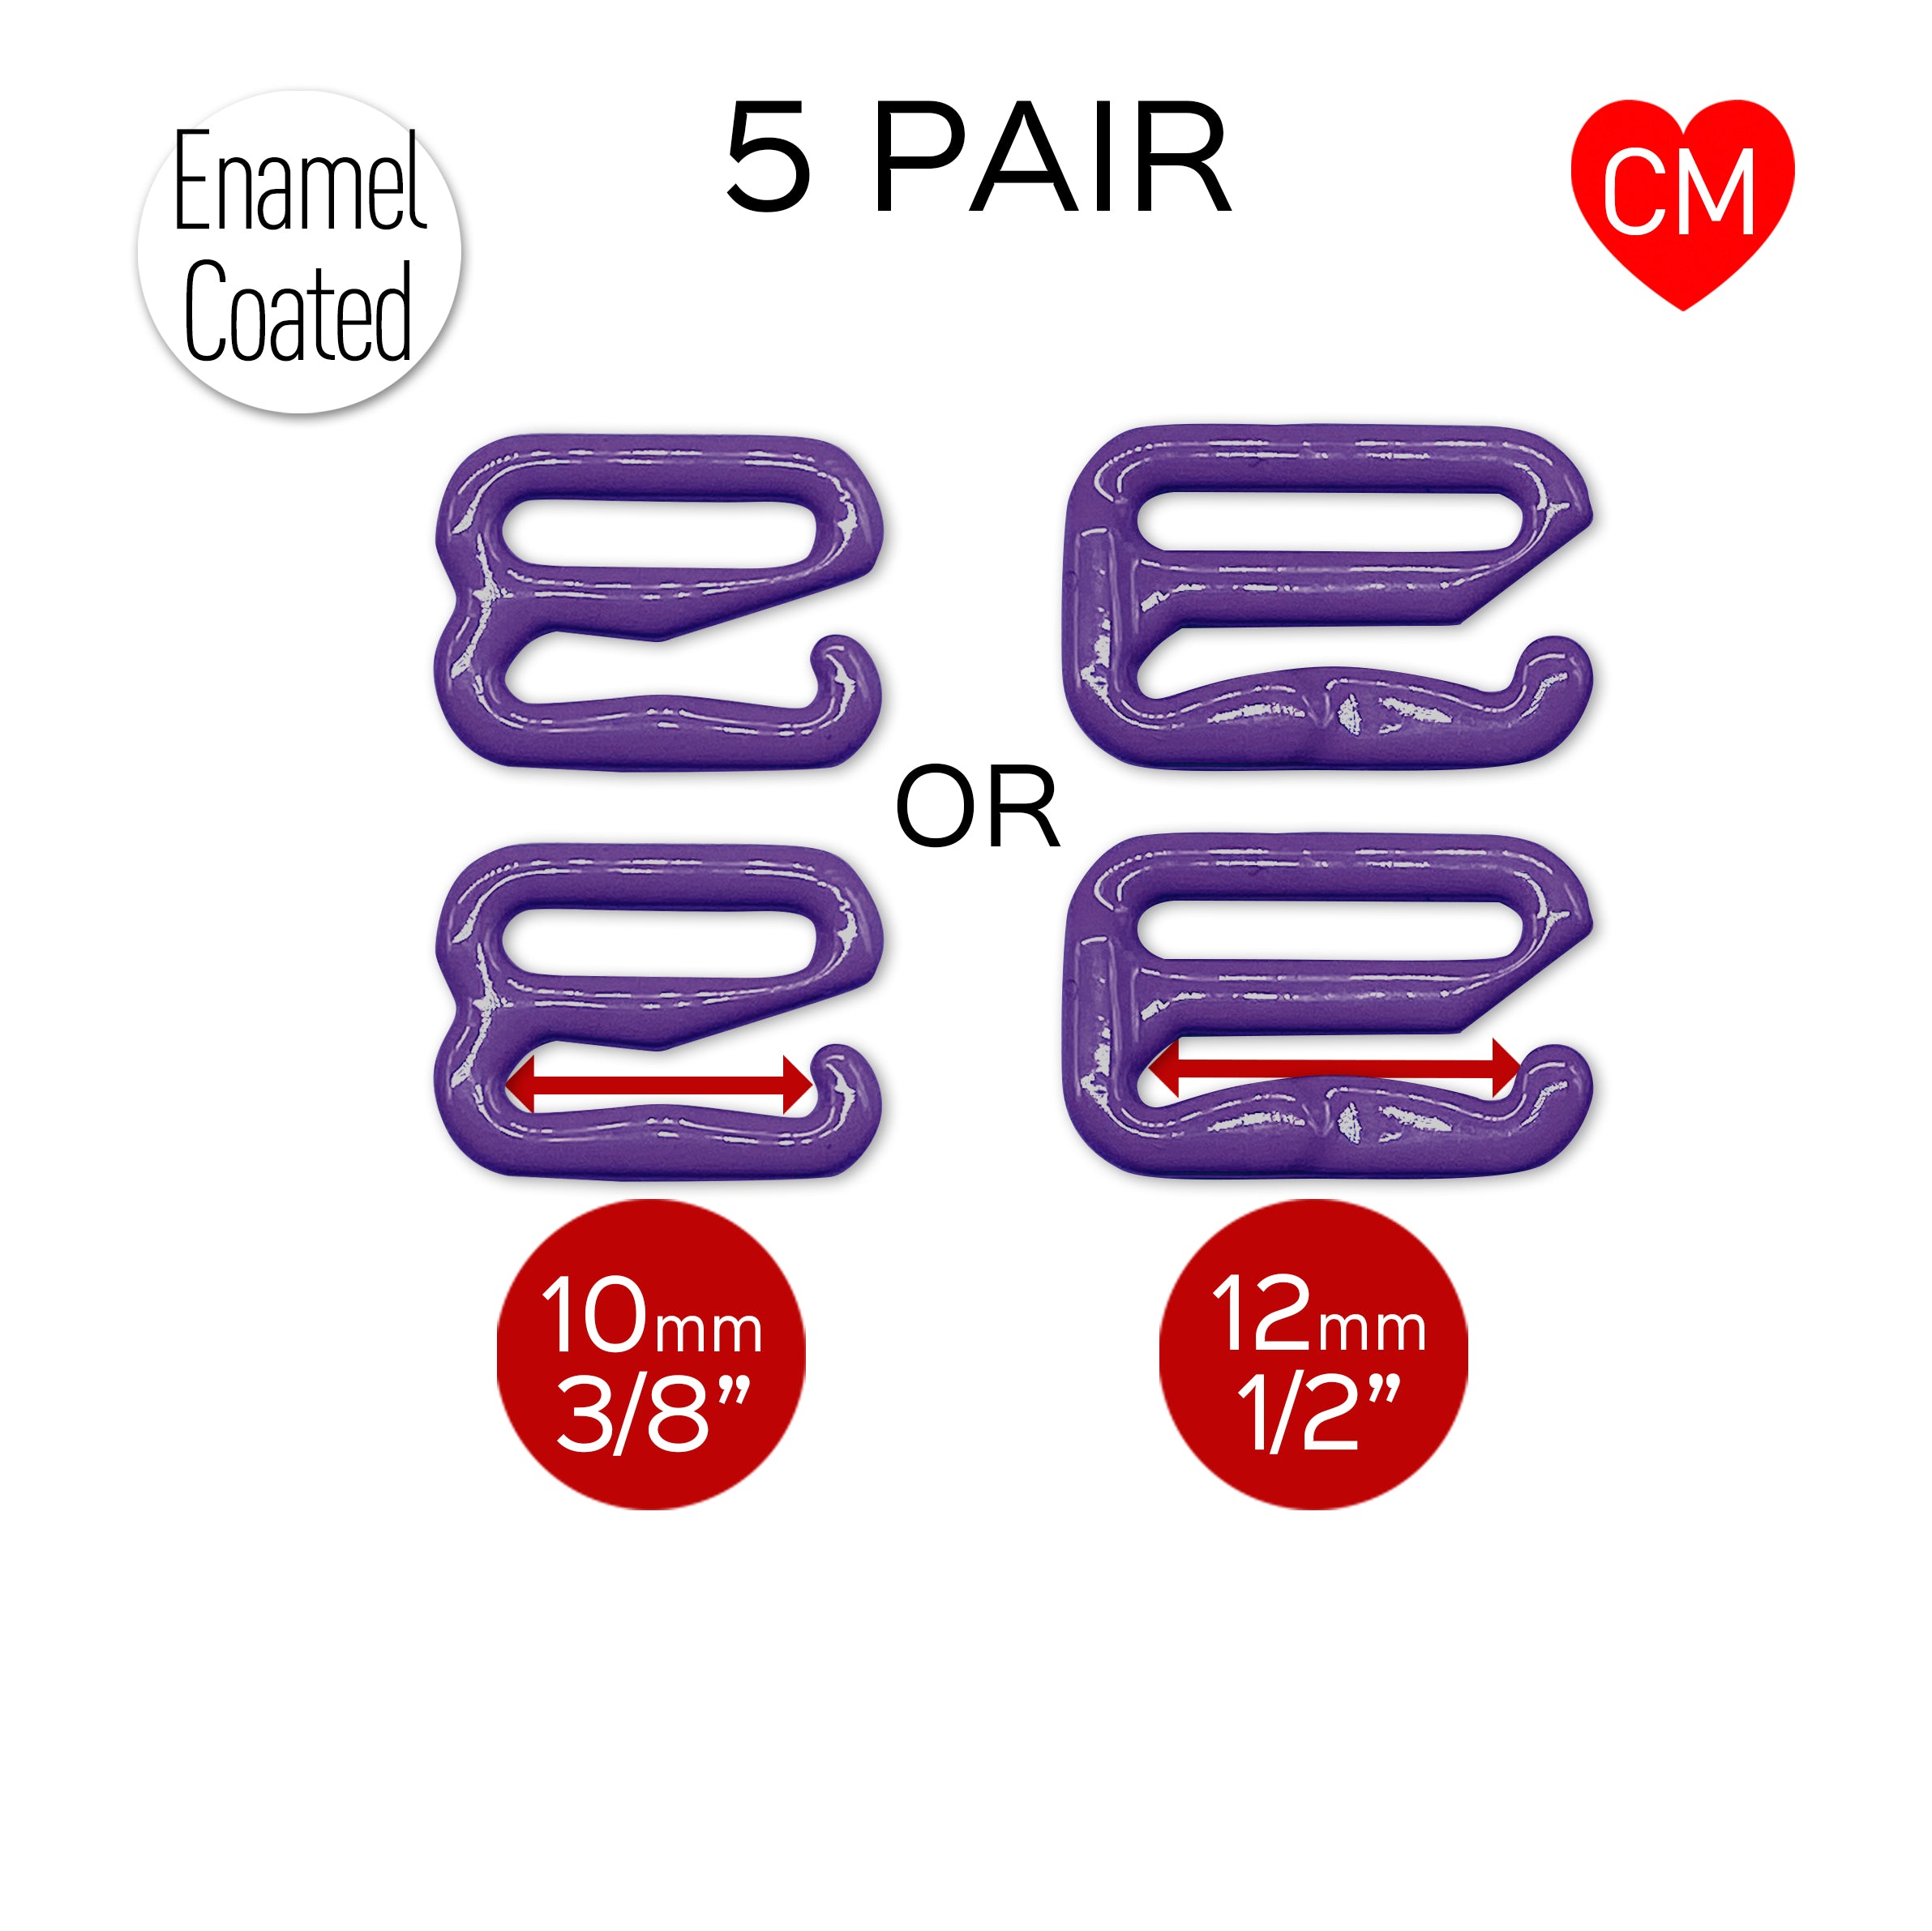 CLEARANCE- 5 Pair of Bra Strap Slider G Hooks in Enamel Coated Jewel Purple for Swimwear or Bra making- 3/8" or 1/2"